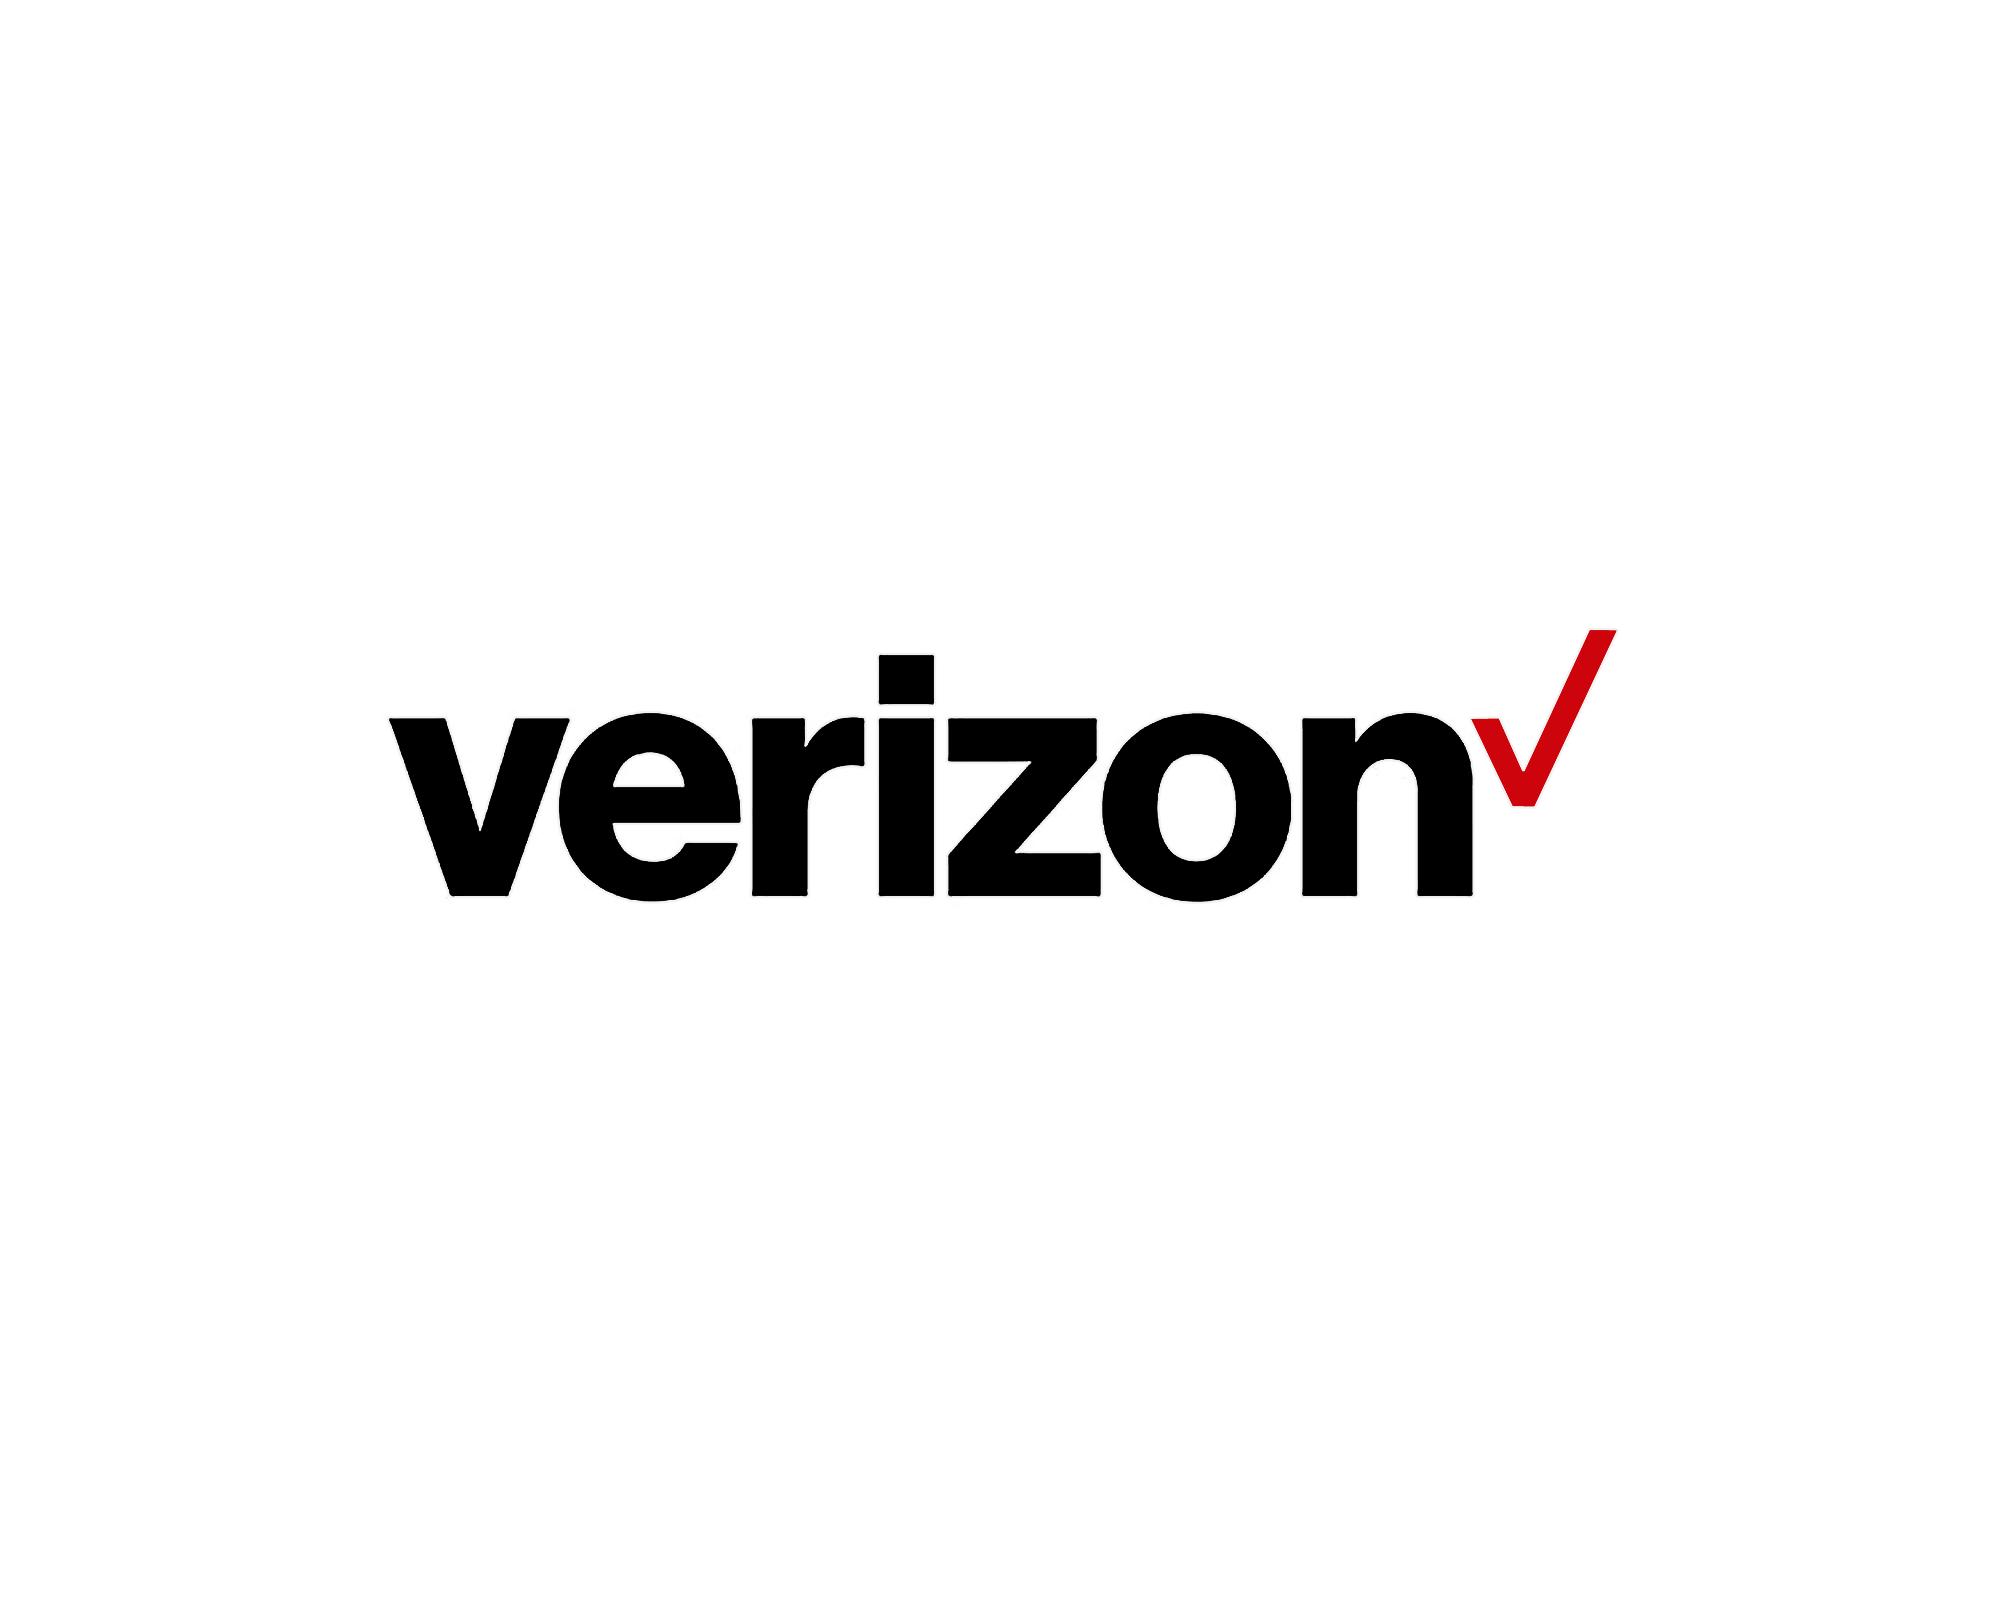 Verison Logo - Verizon wireless Logos